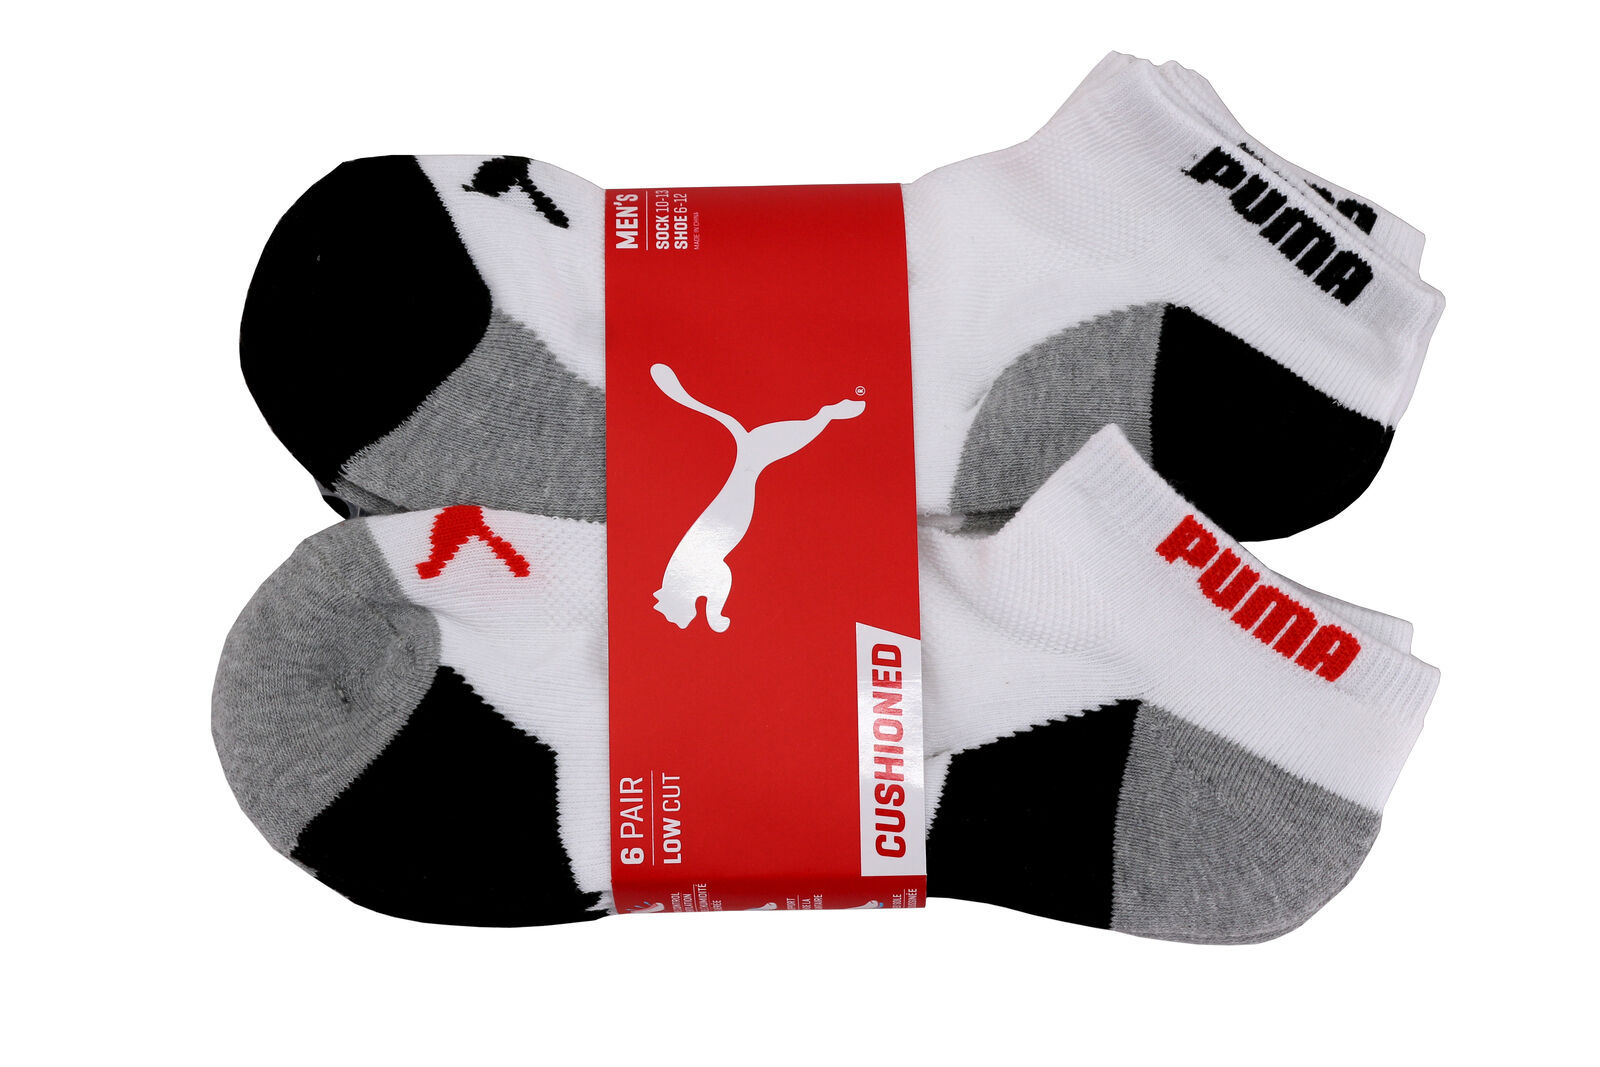 puma cushioned socks